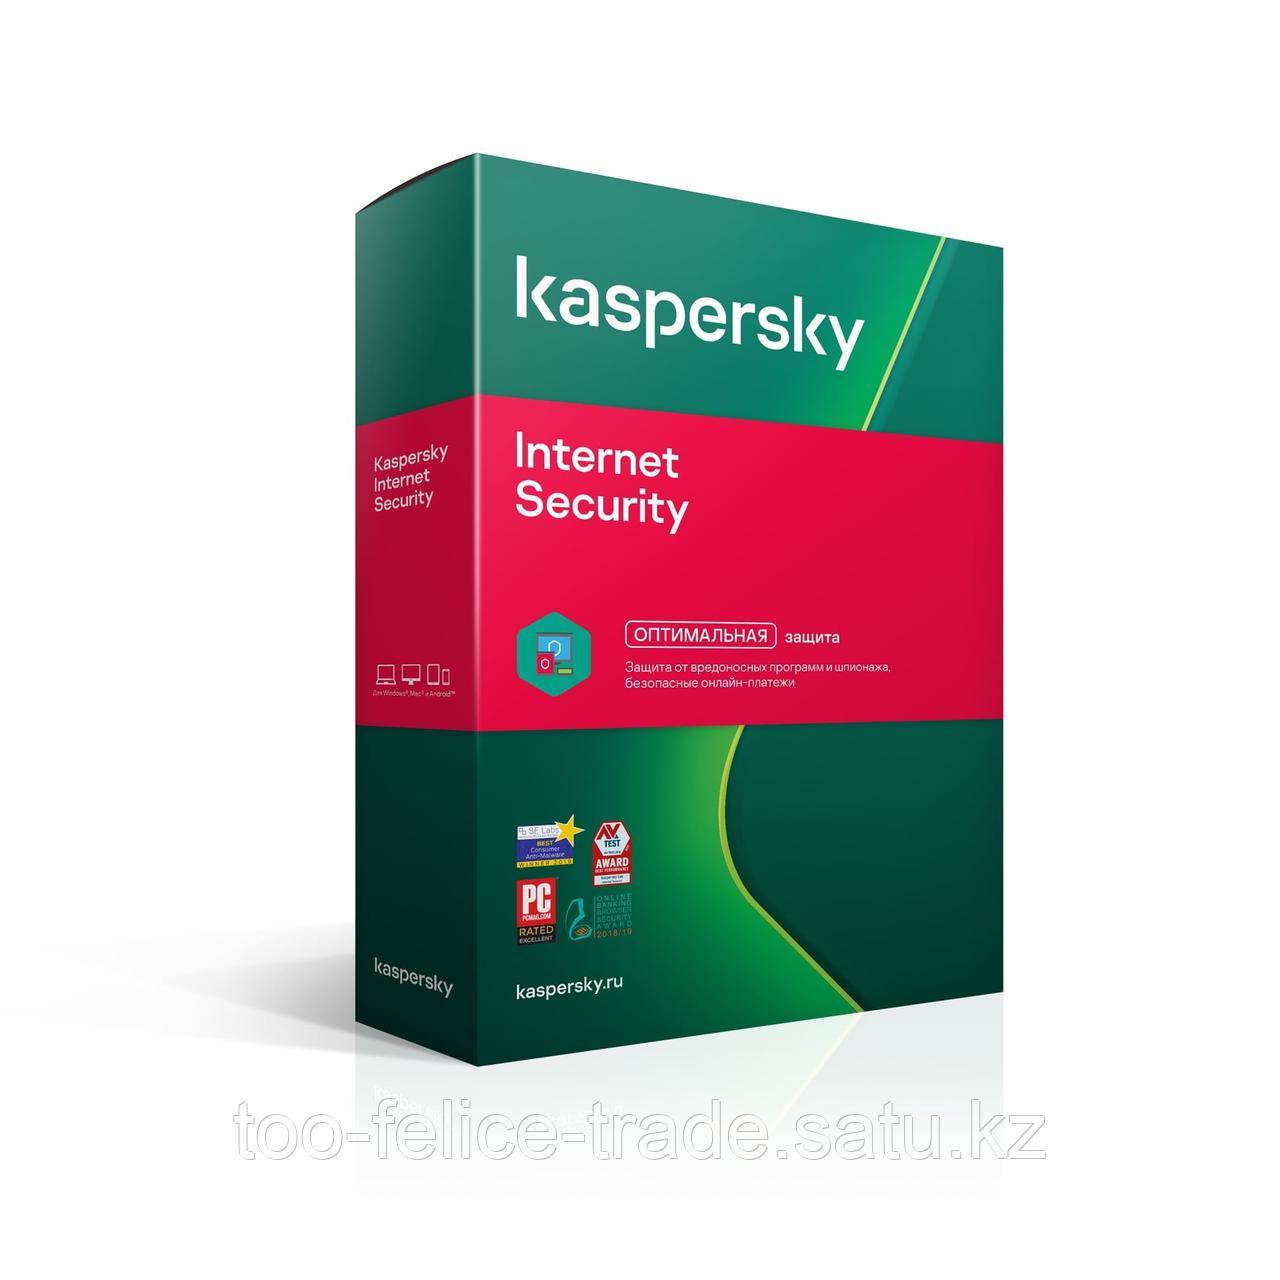 Программное обеспечение Kaspersky/Internet Security Kazakhstan Edition. 2021 Box 5-Device 1 year Renewal